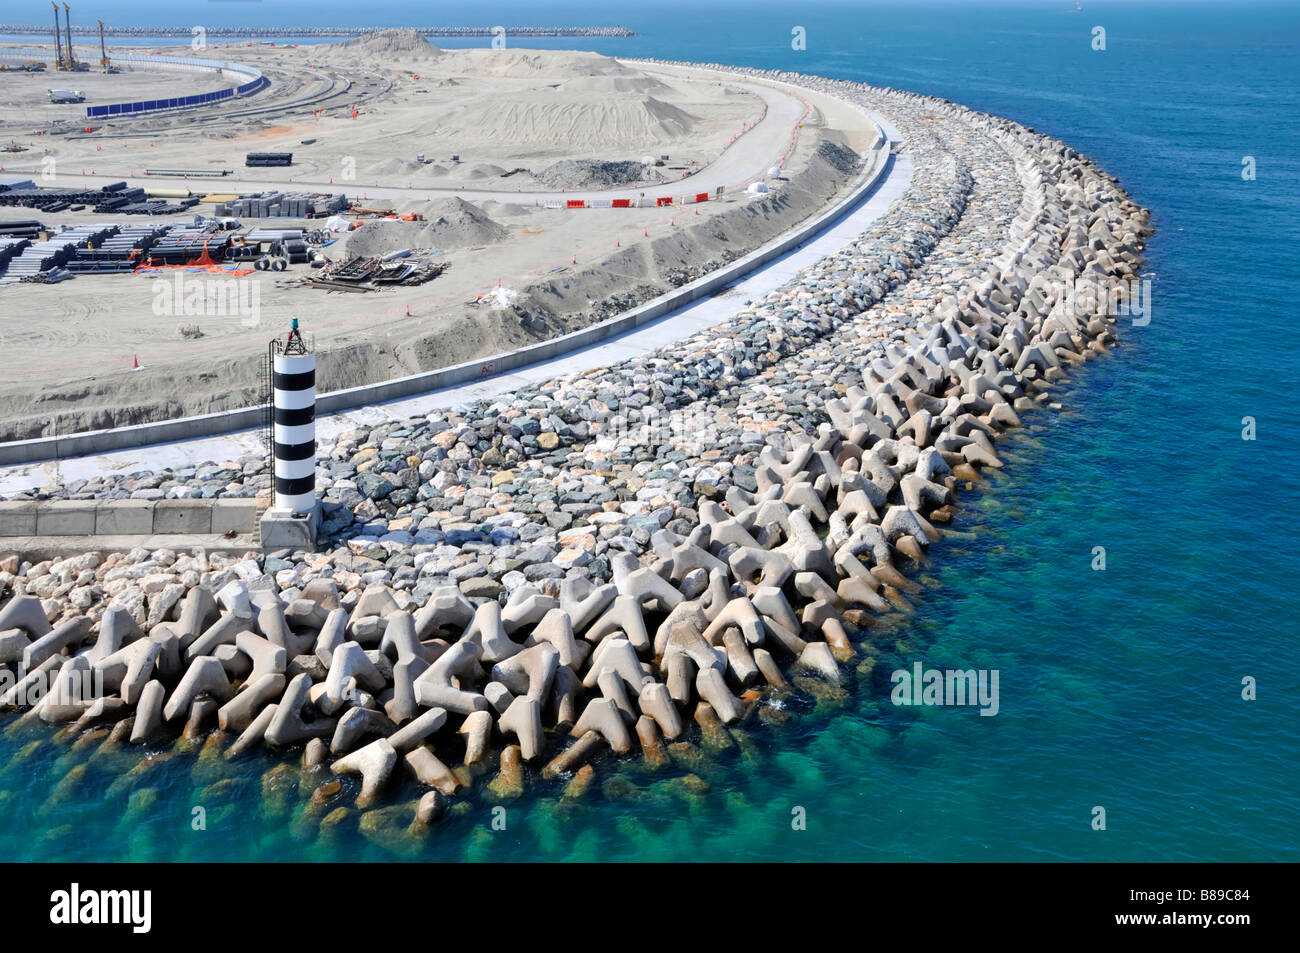 Sea defences civil engineering infrastructure project construction site for Maritime City using Tetrapod type concrete blocks on shoreline Dubai UAE Stock Photo